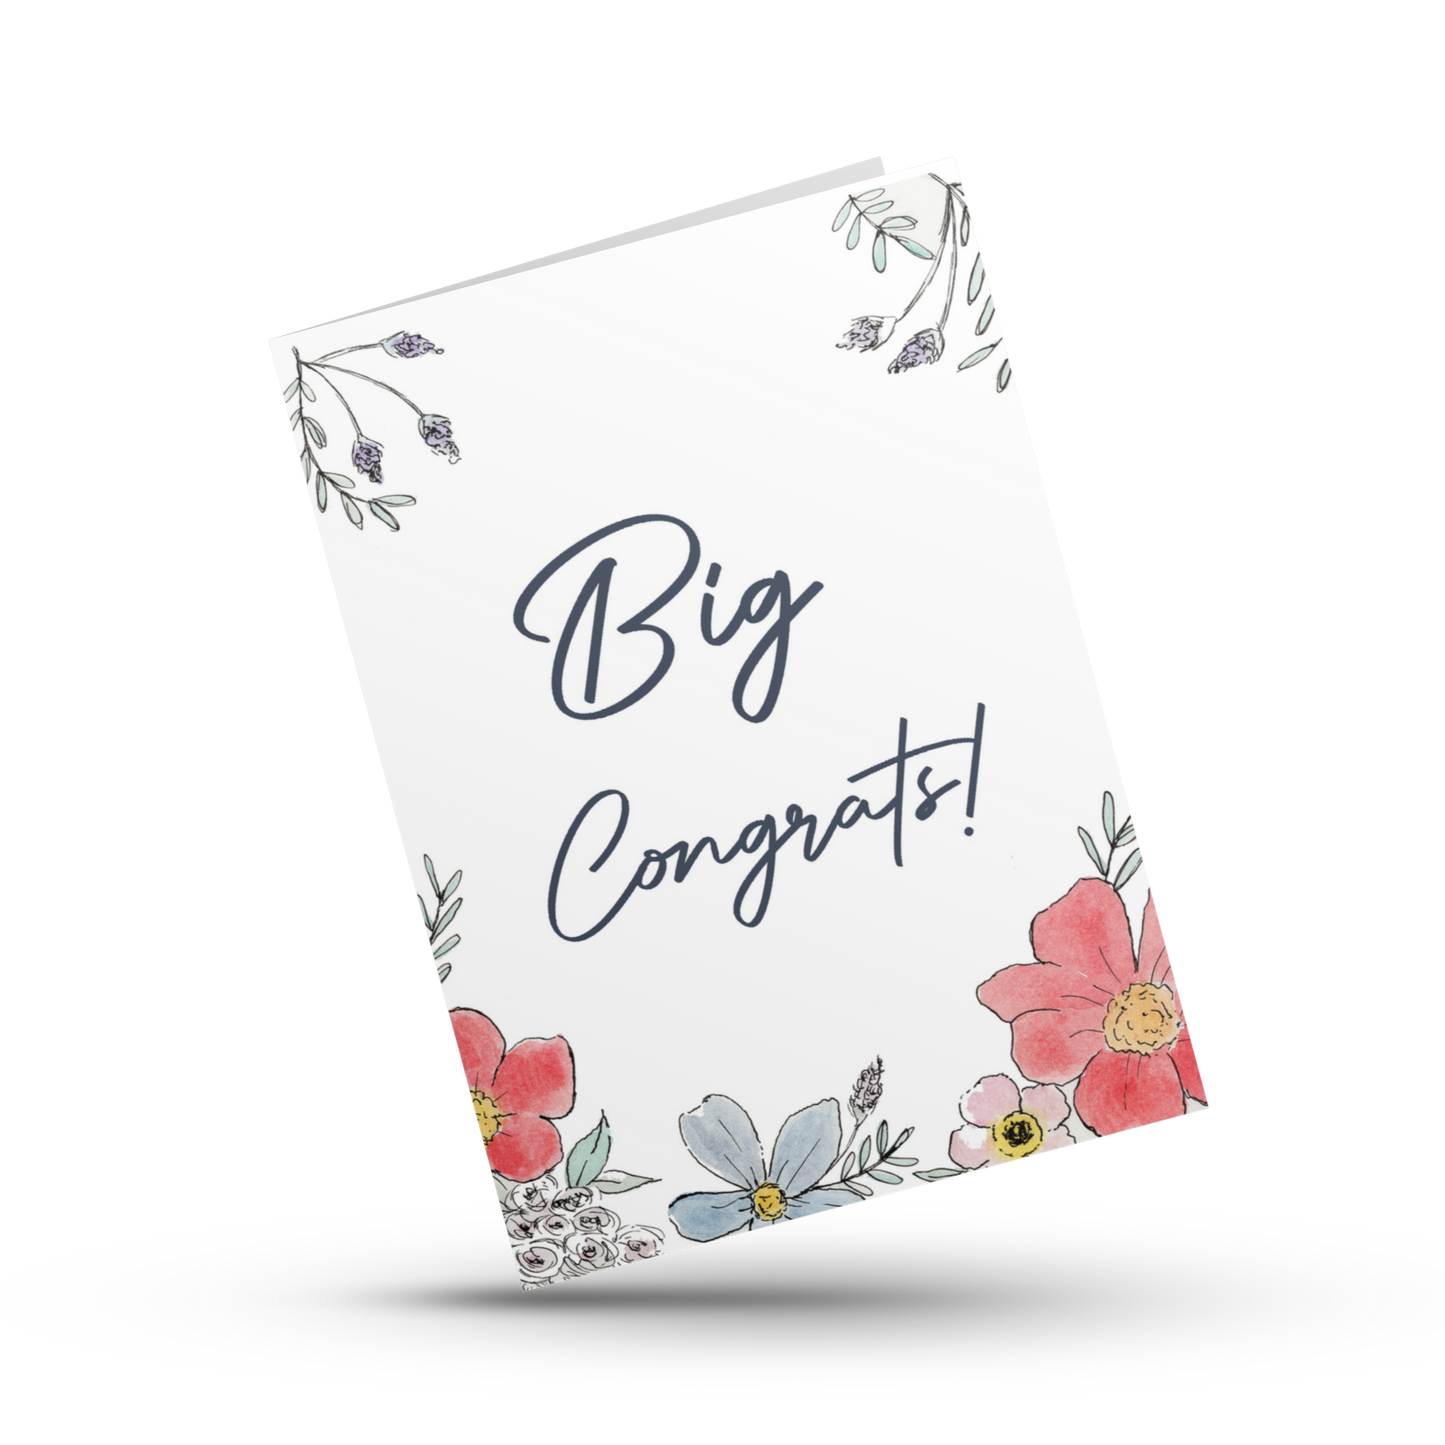 Big congrats, Congratulations card, Floral card, You did it, Engagement card, Floral wedding card, Big promotion card, Pregnancy, New job